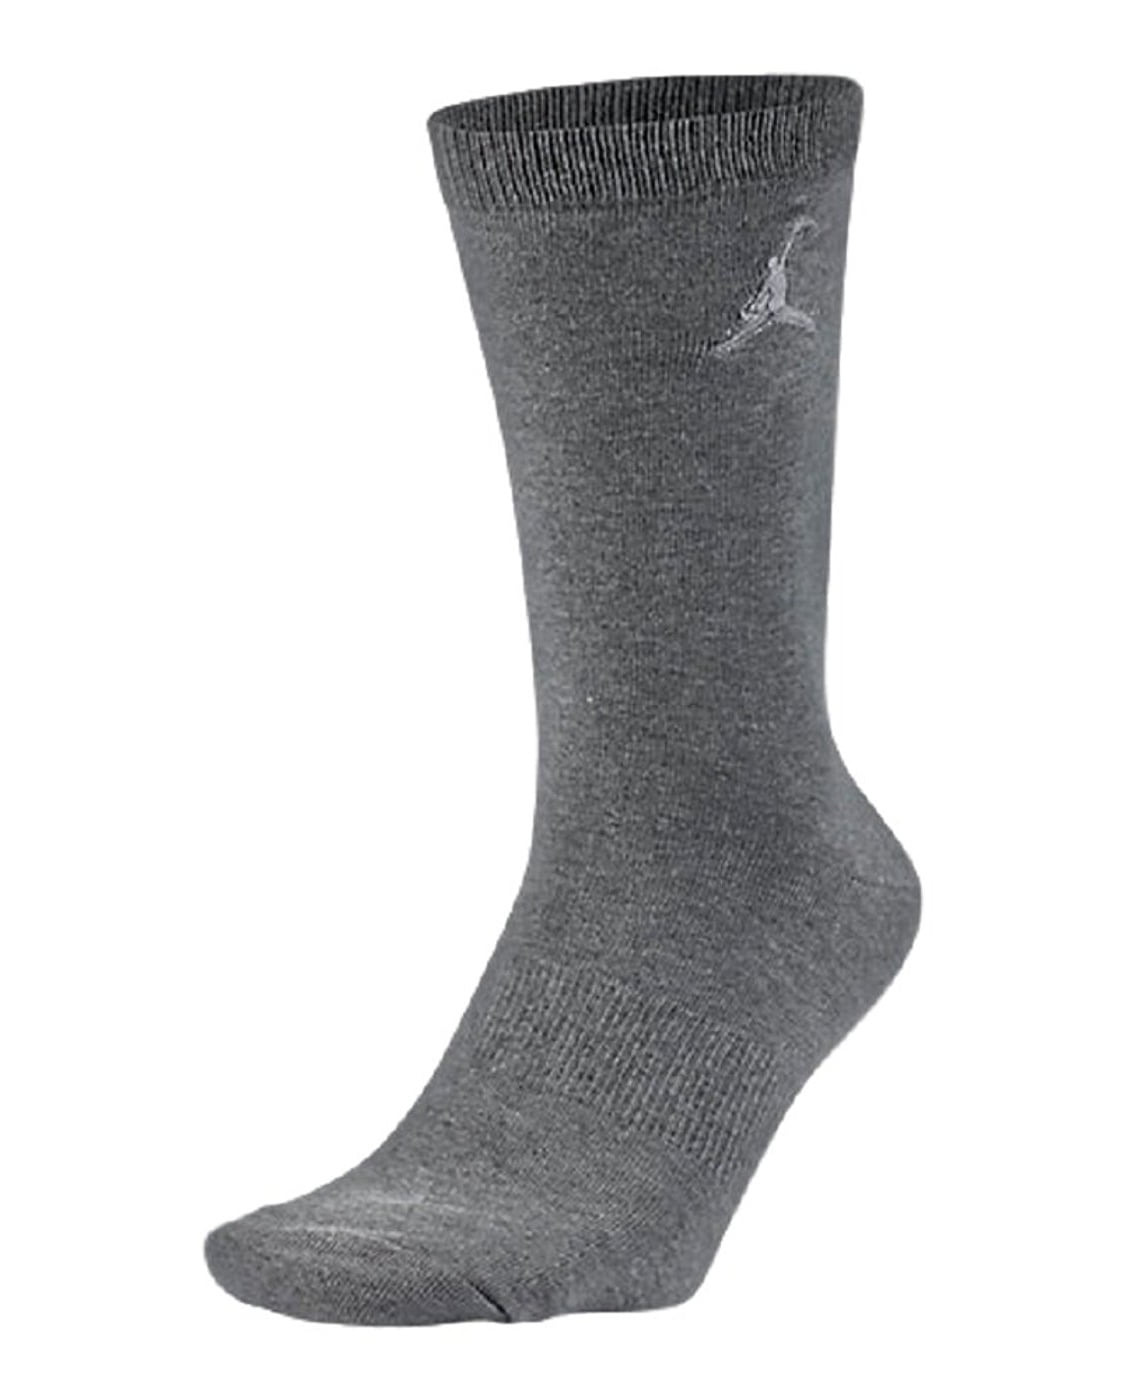 Nike Jordan Crew Gray Socks Men's Size 